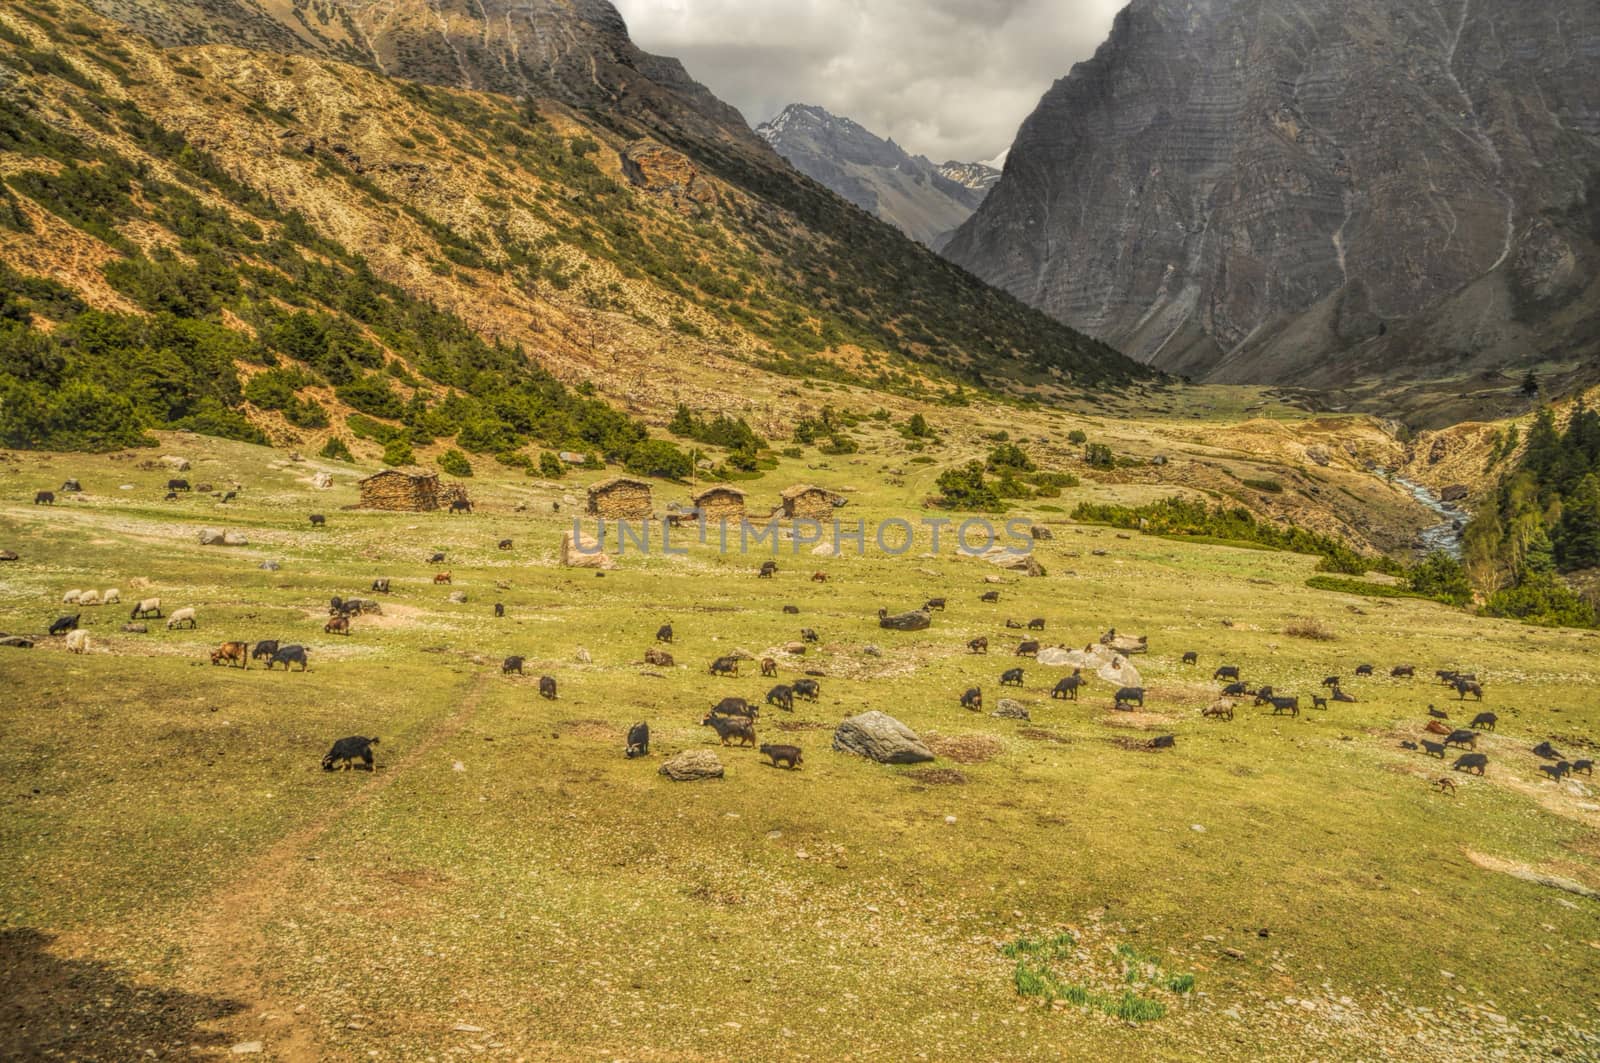 Goats in Himalayas by MichalKnitl